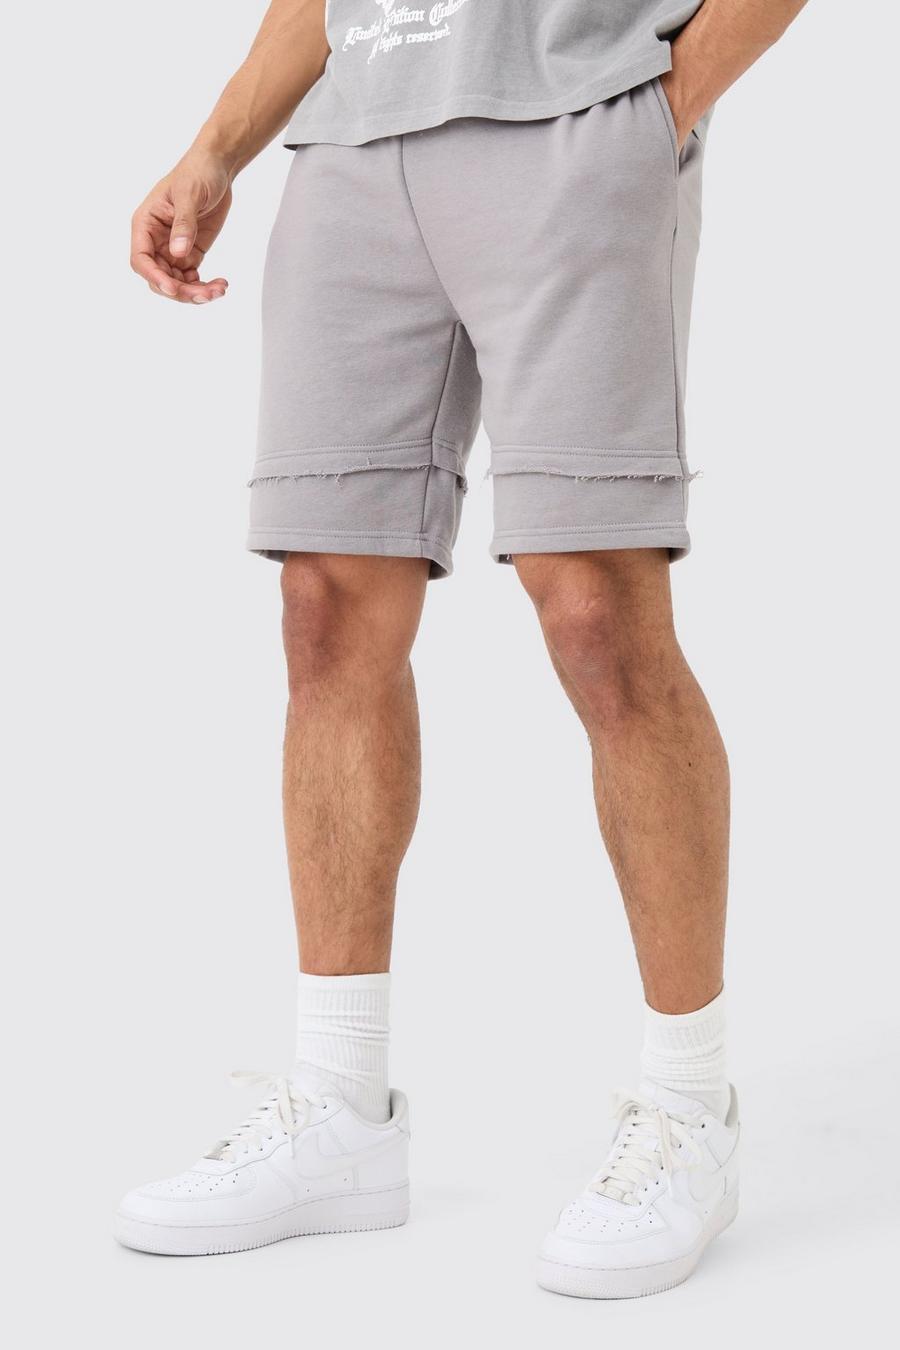 Lockere Shorts, Charcoal